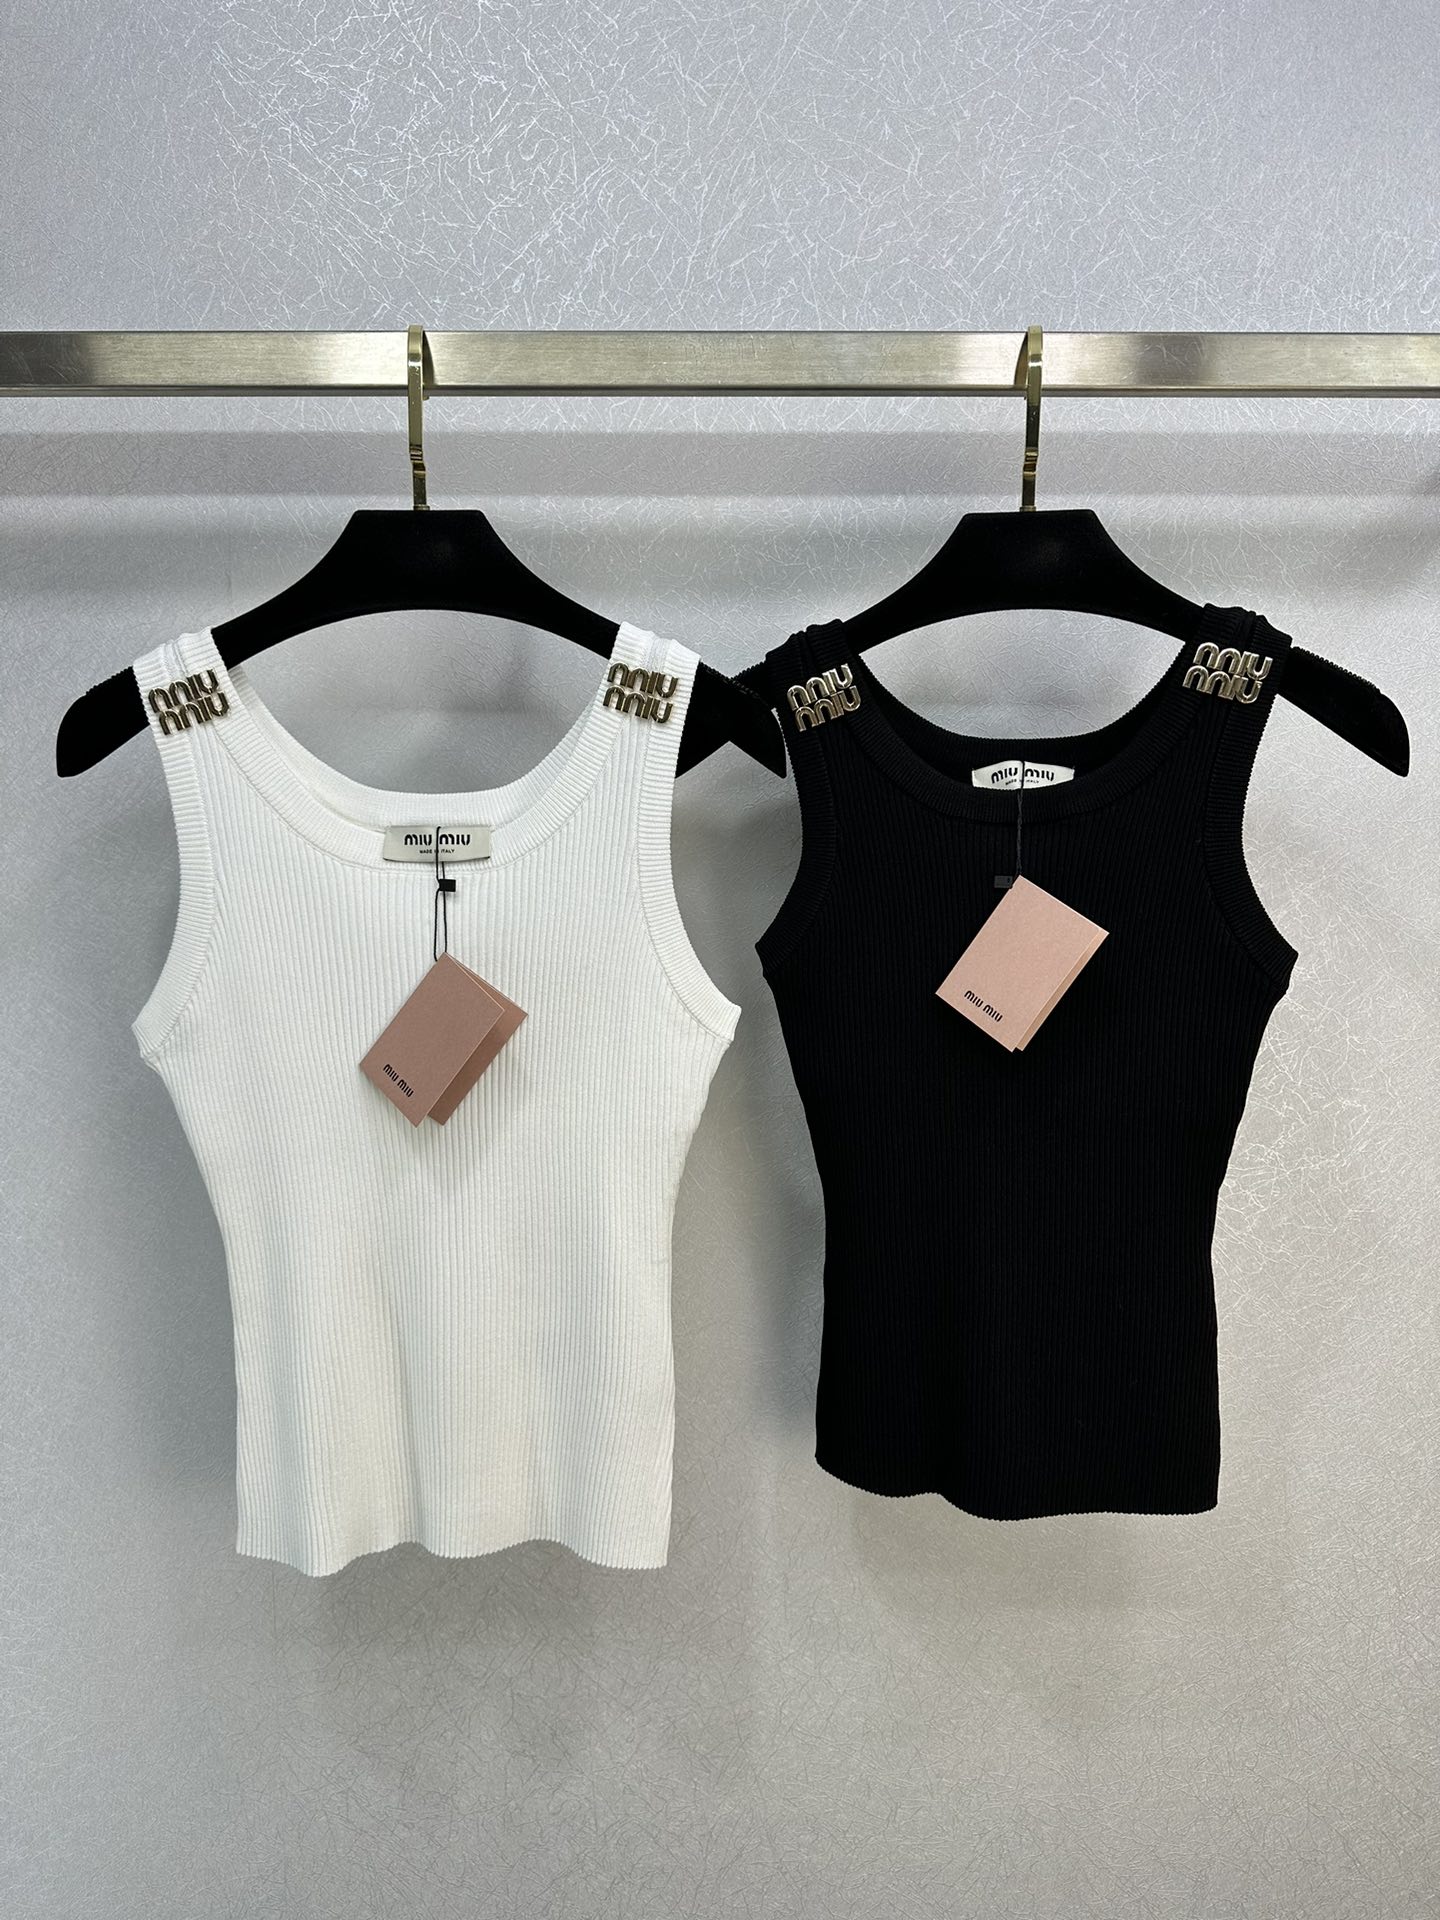 MiuMiu Clothing Tank Tops&Camis Knitting Spring Collection